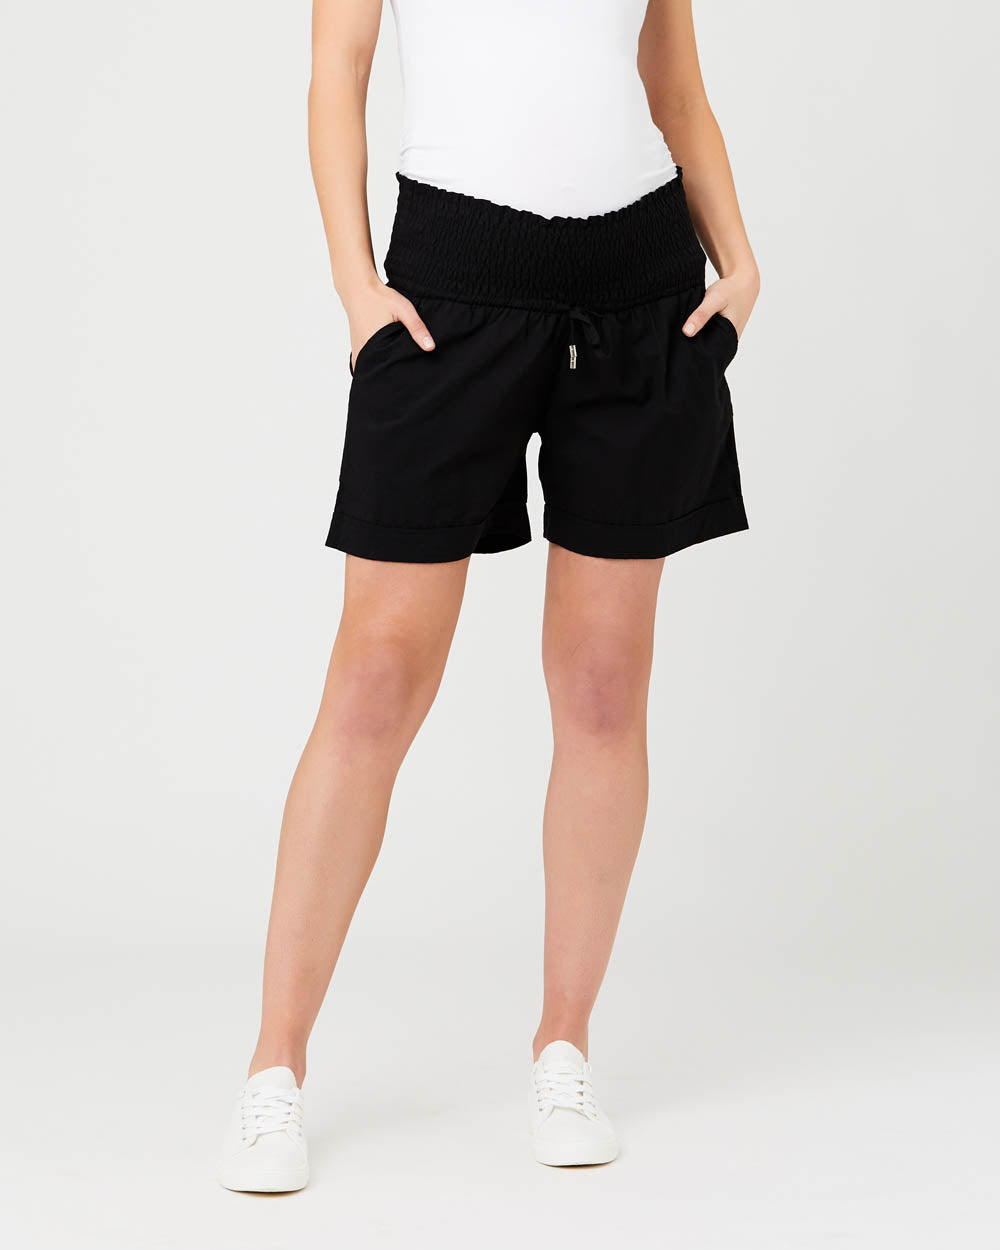 Ripe Maternity 'Philly' Shorts - Black